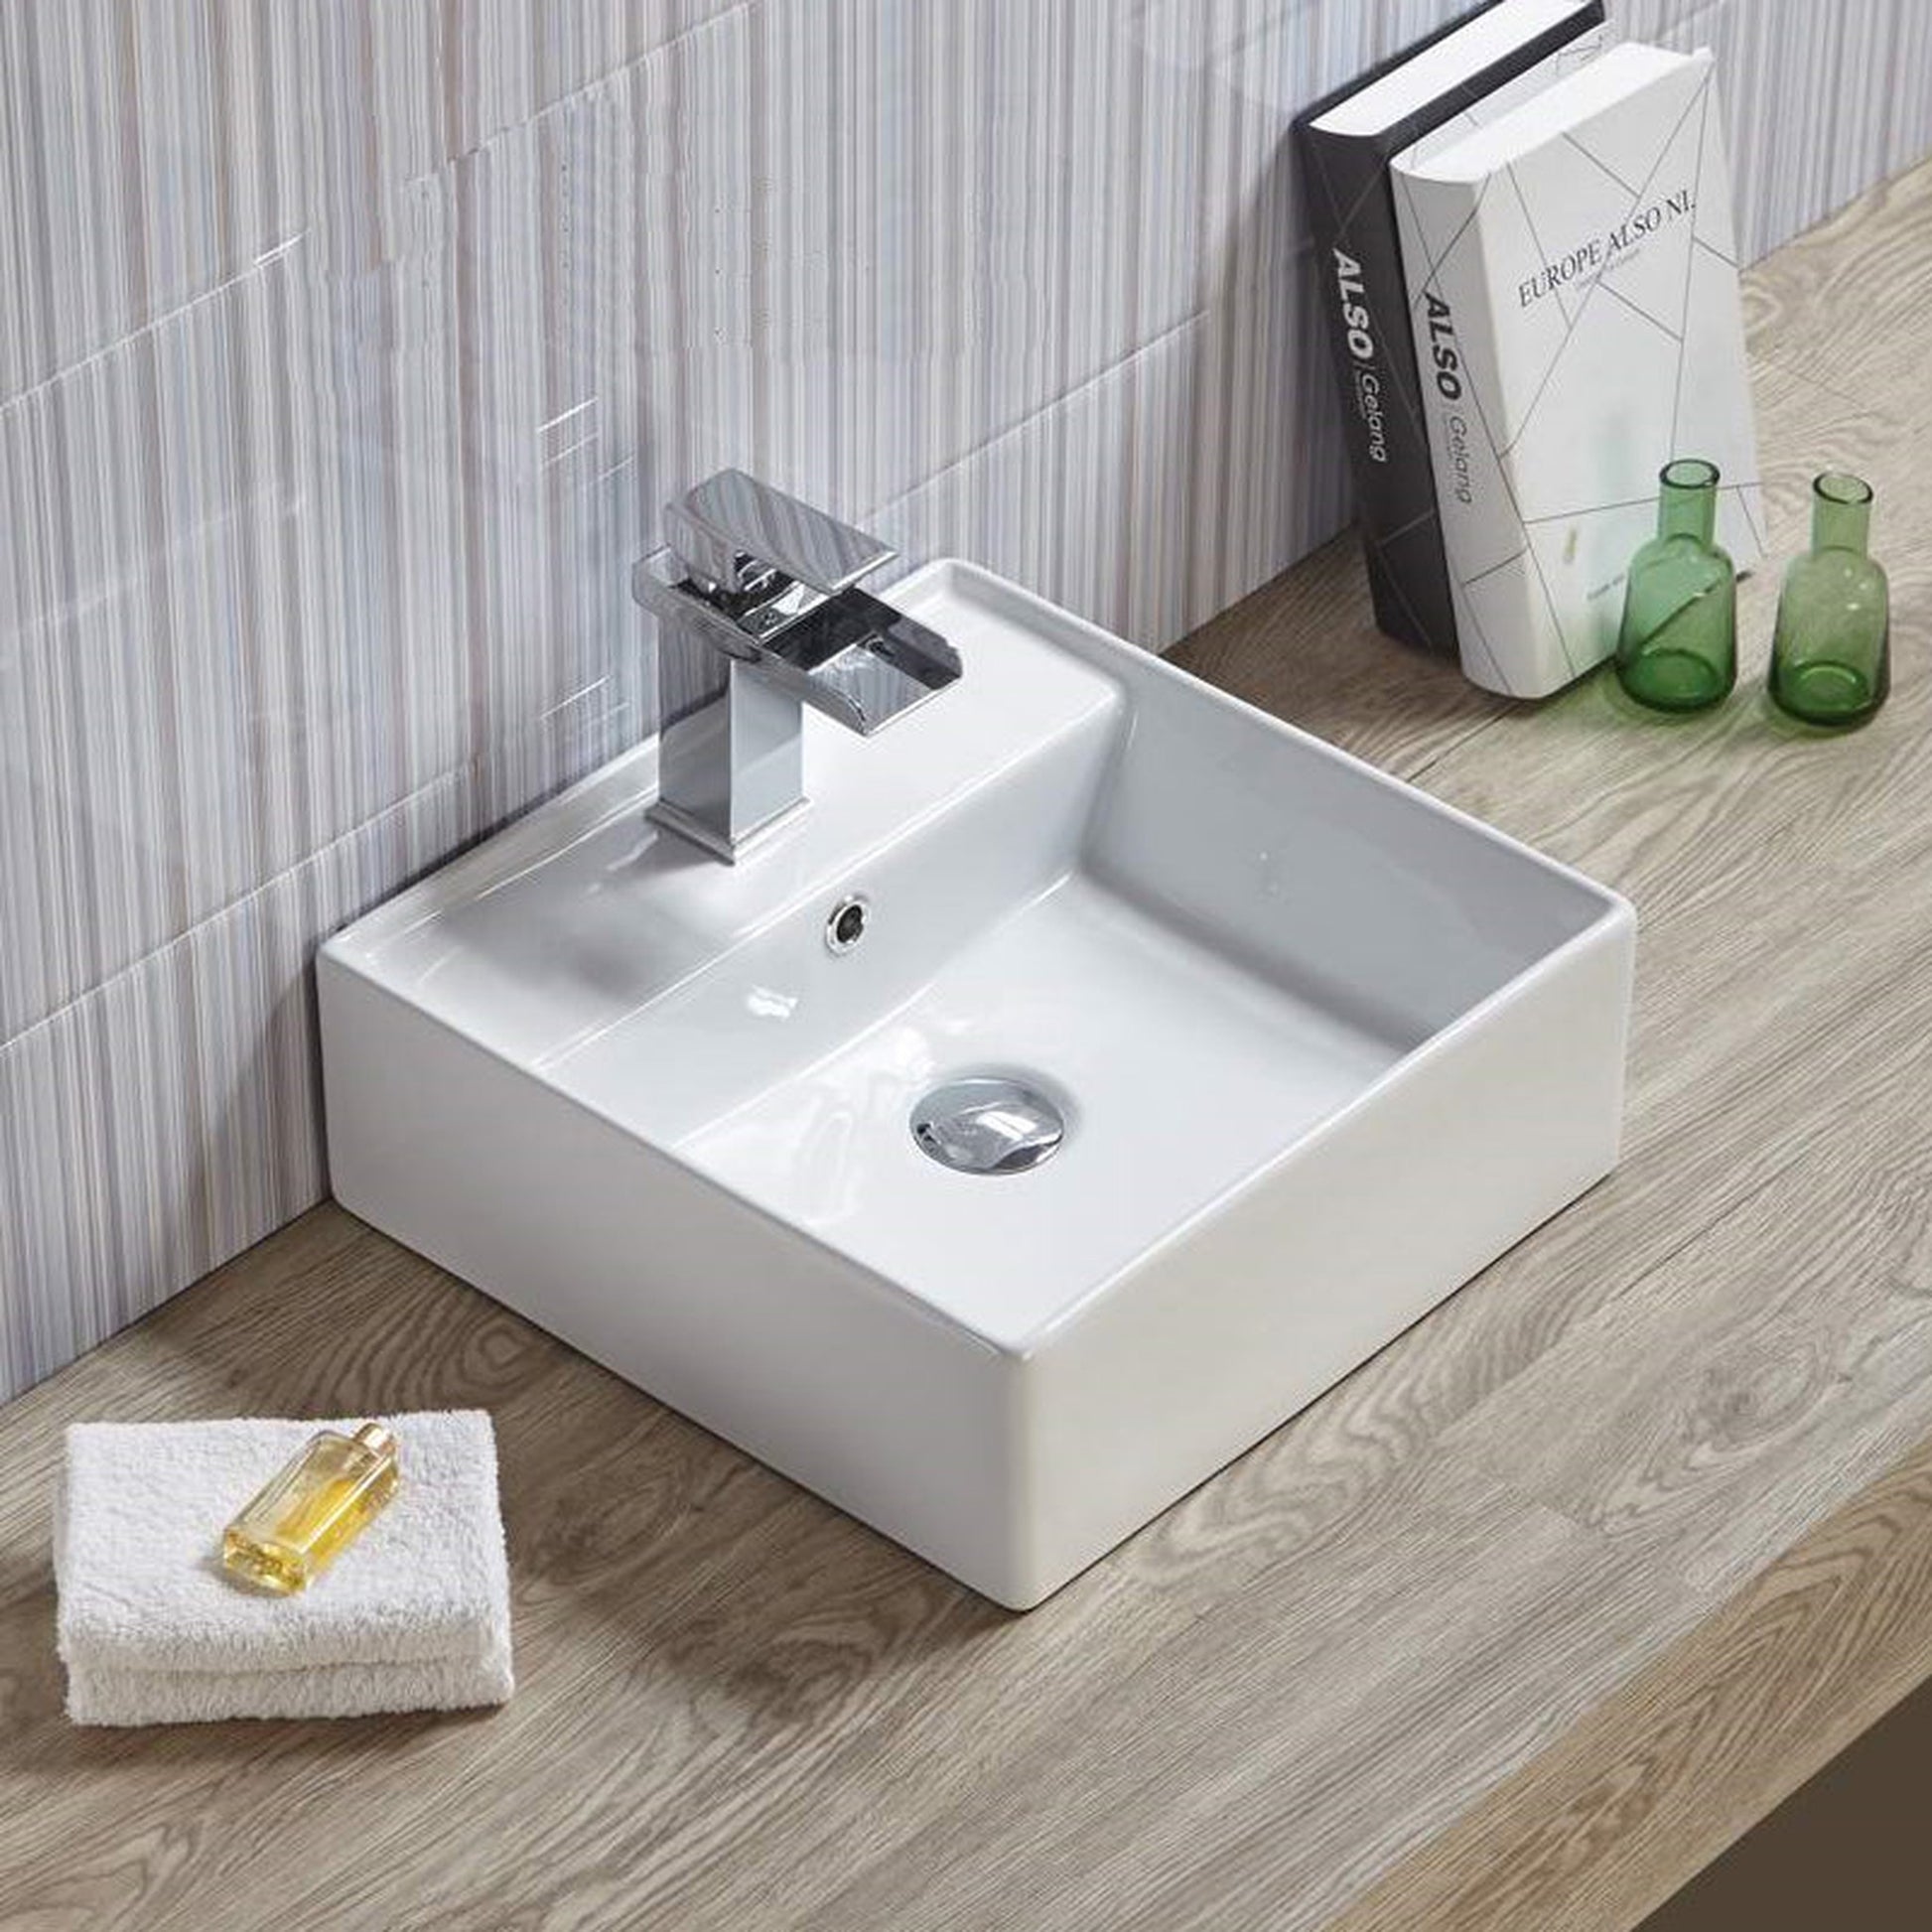 American Imaginations AI-28178 Square White Ceramic Bathroom Vessel Sink with Enamel Glaze Finish